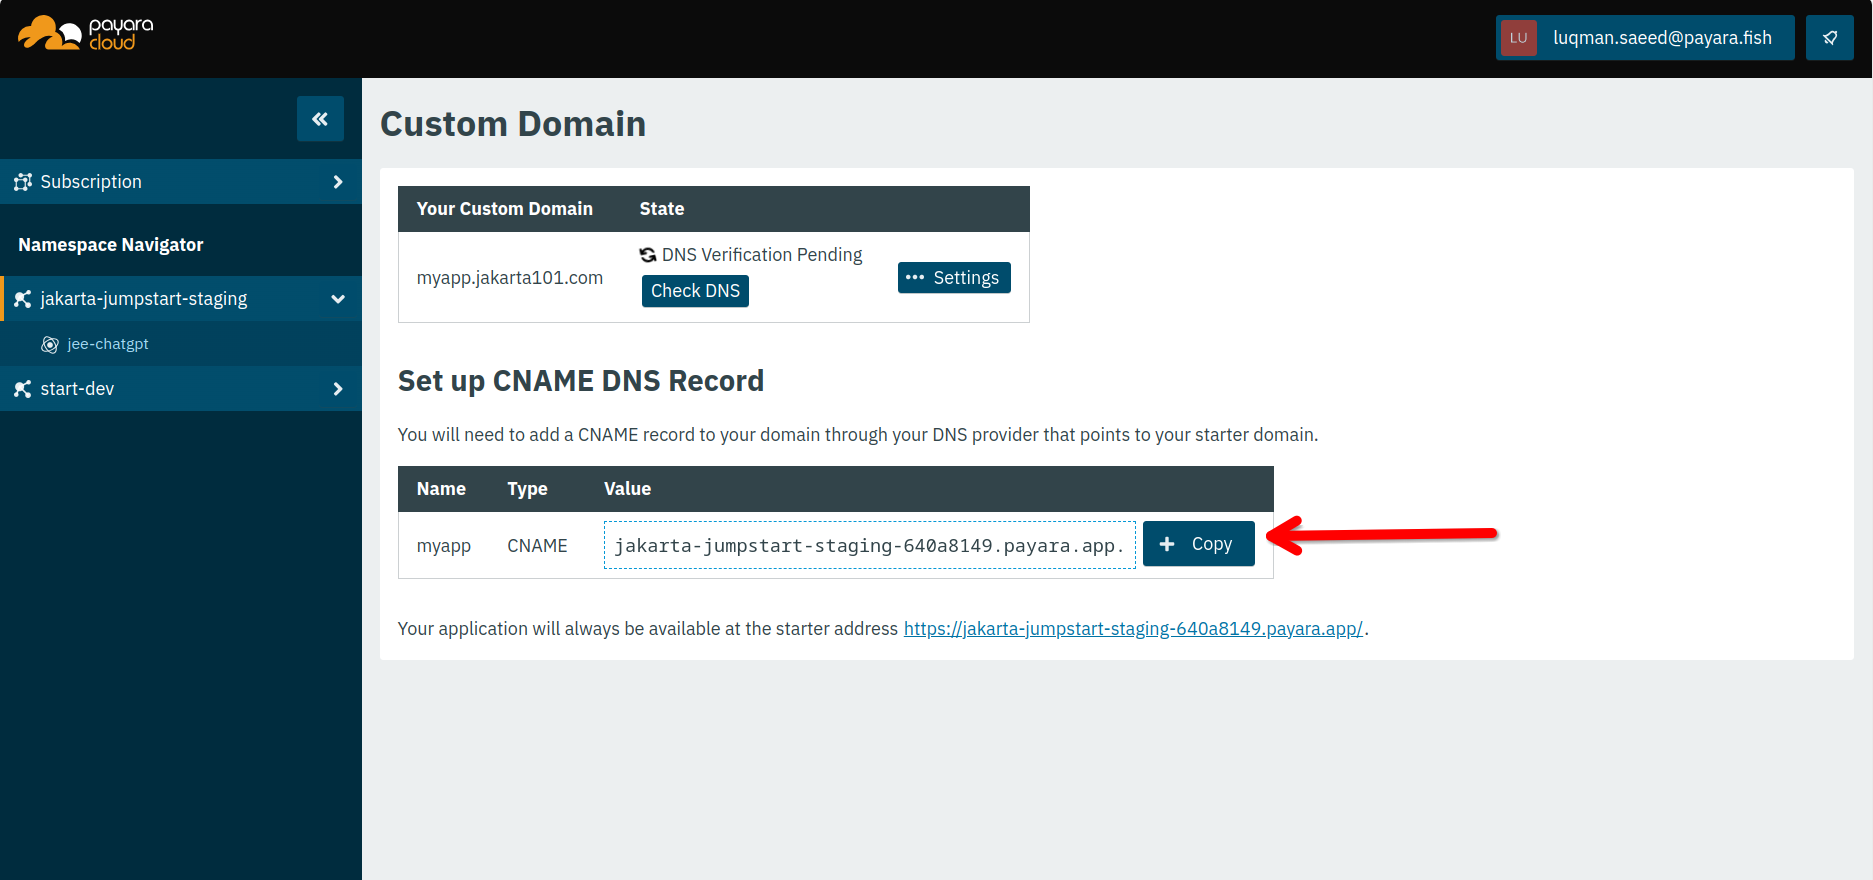 Interface displaying DNS info for custom domain setup